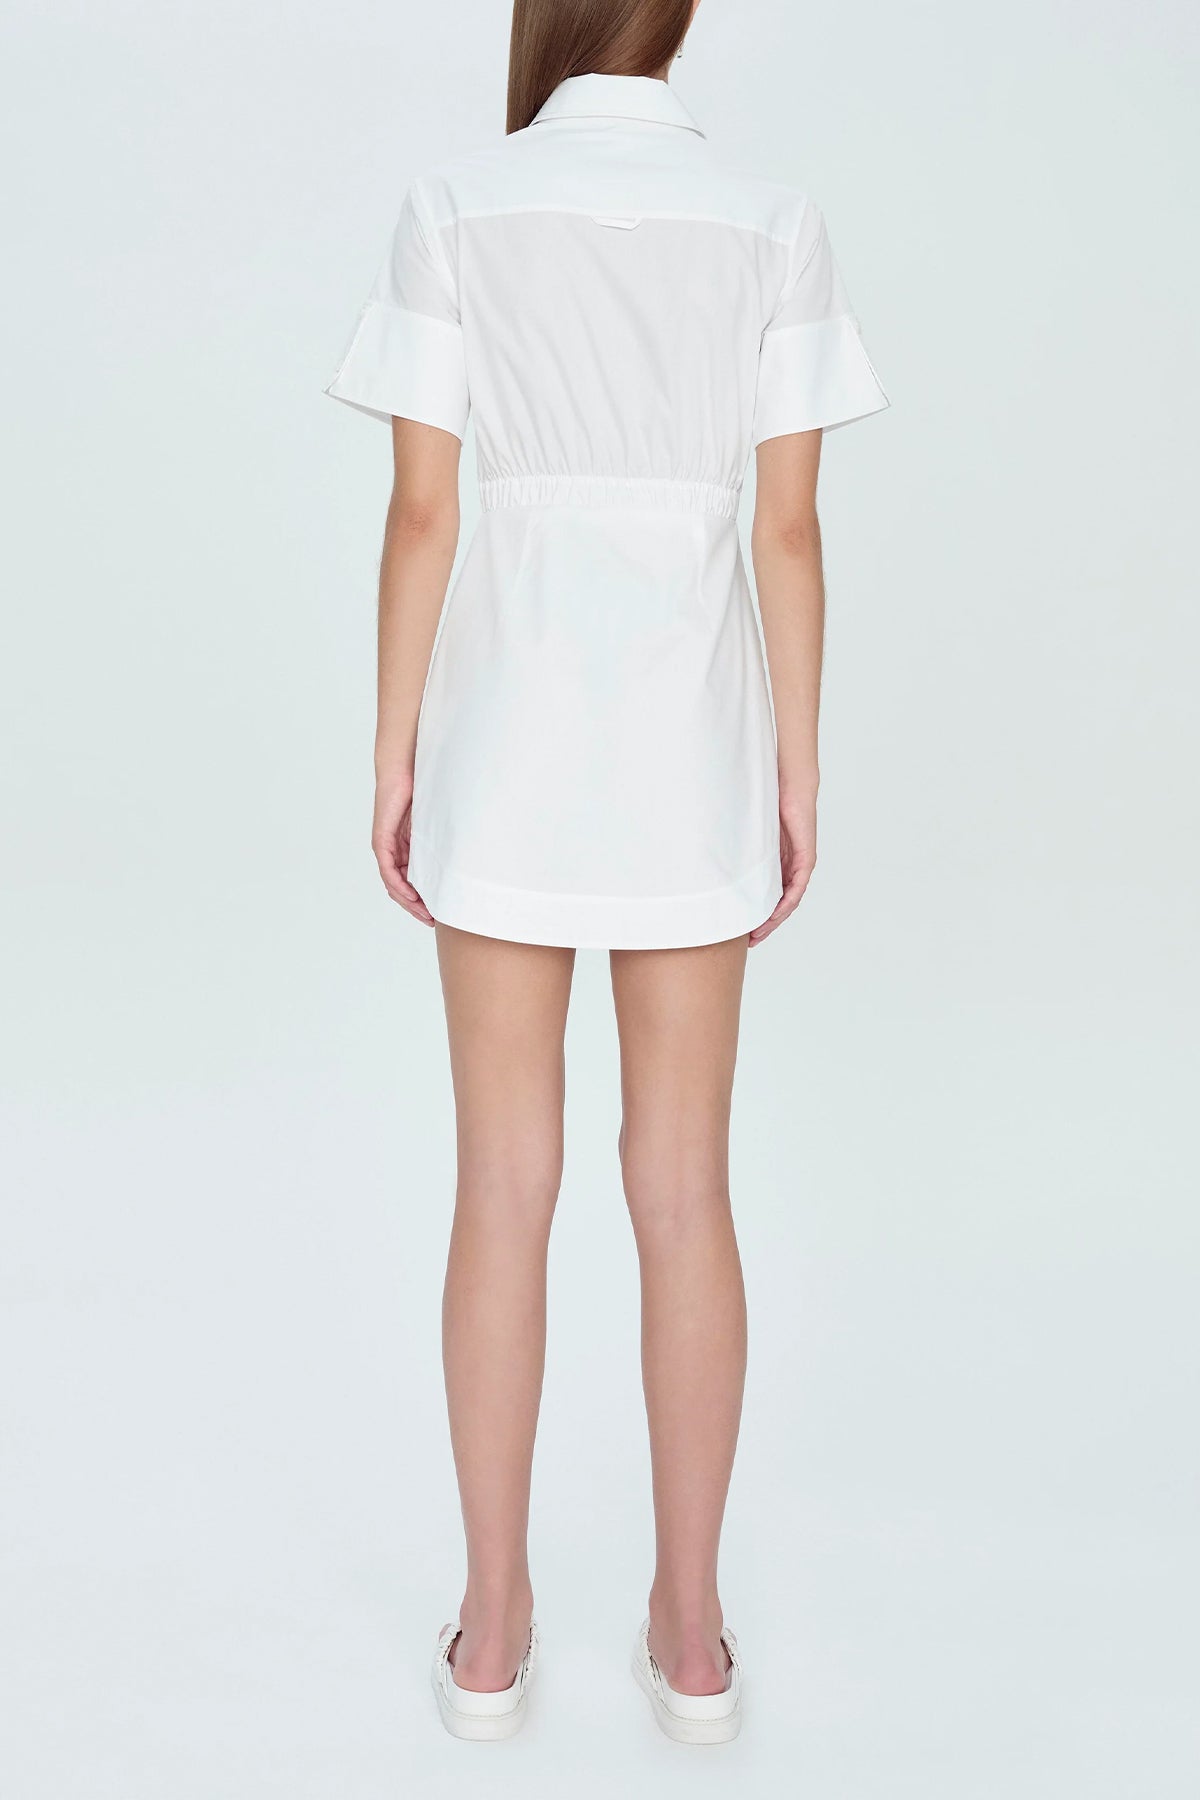 Marcy Mini Dress in White - shop-olivia.com